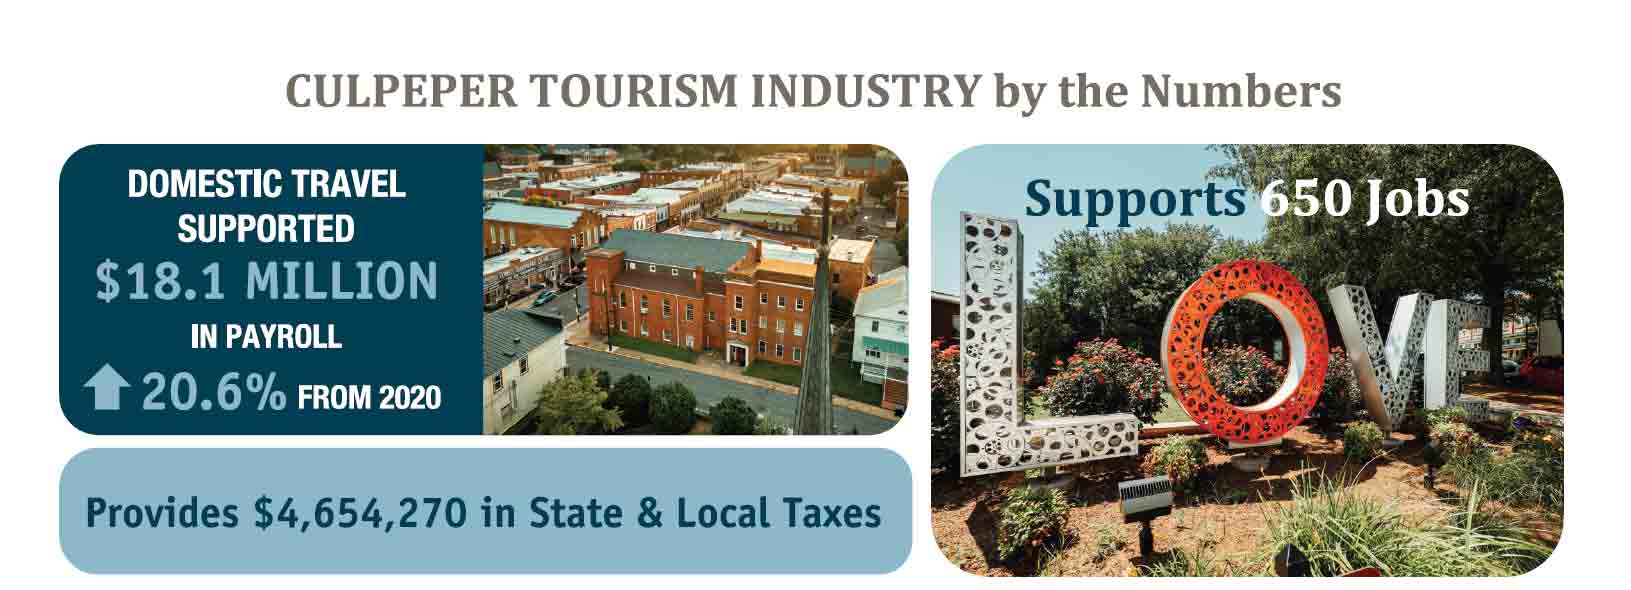 Tourism Revenue Reached $68.8 Million in Culpeper, Virginia in 2021 Image